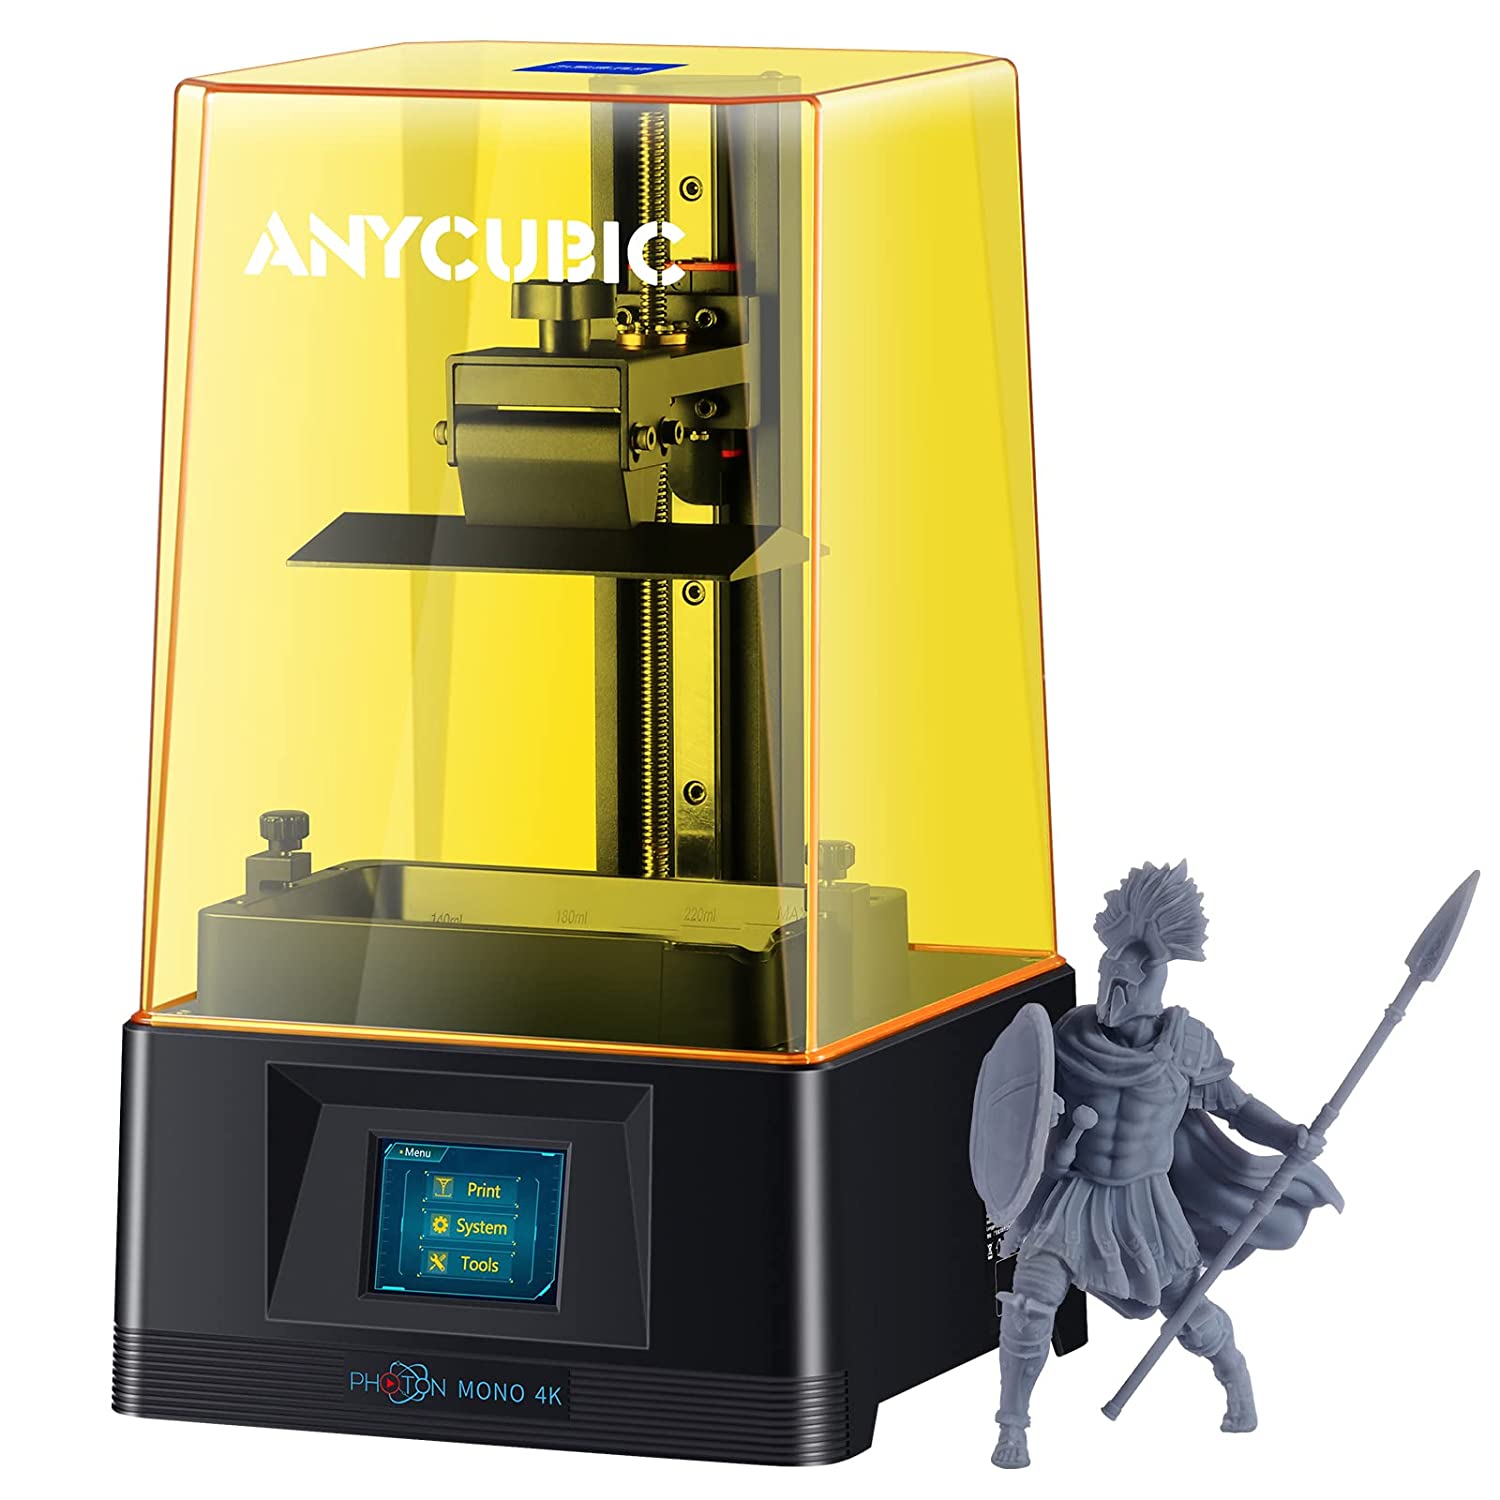 ANYCUBIC Photon Mono LCD 3D Printer